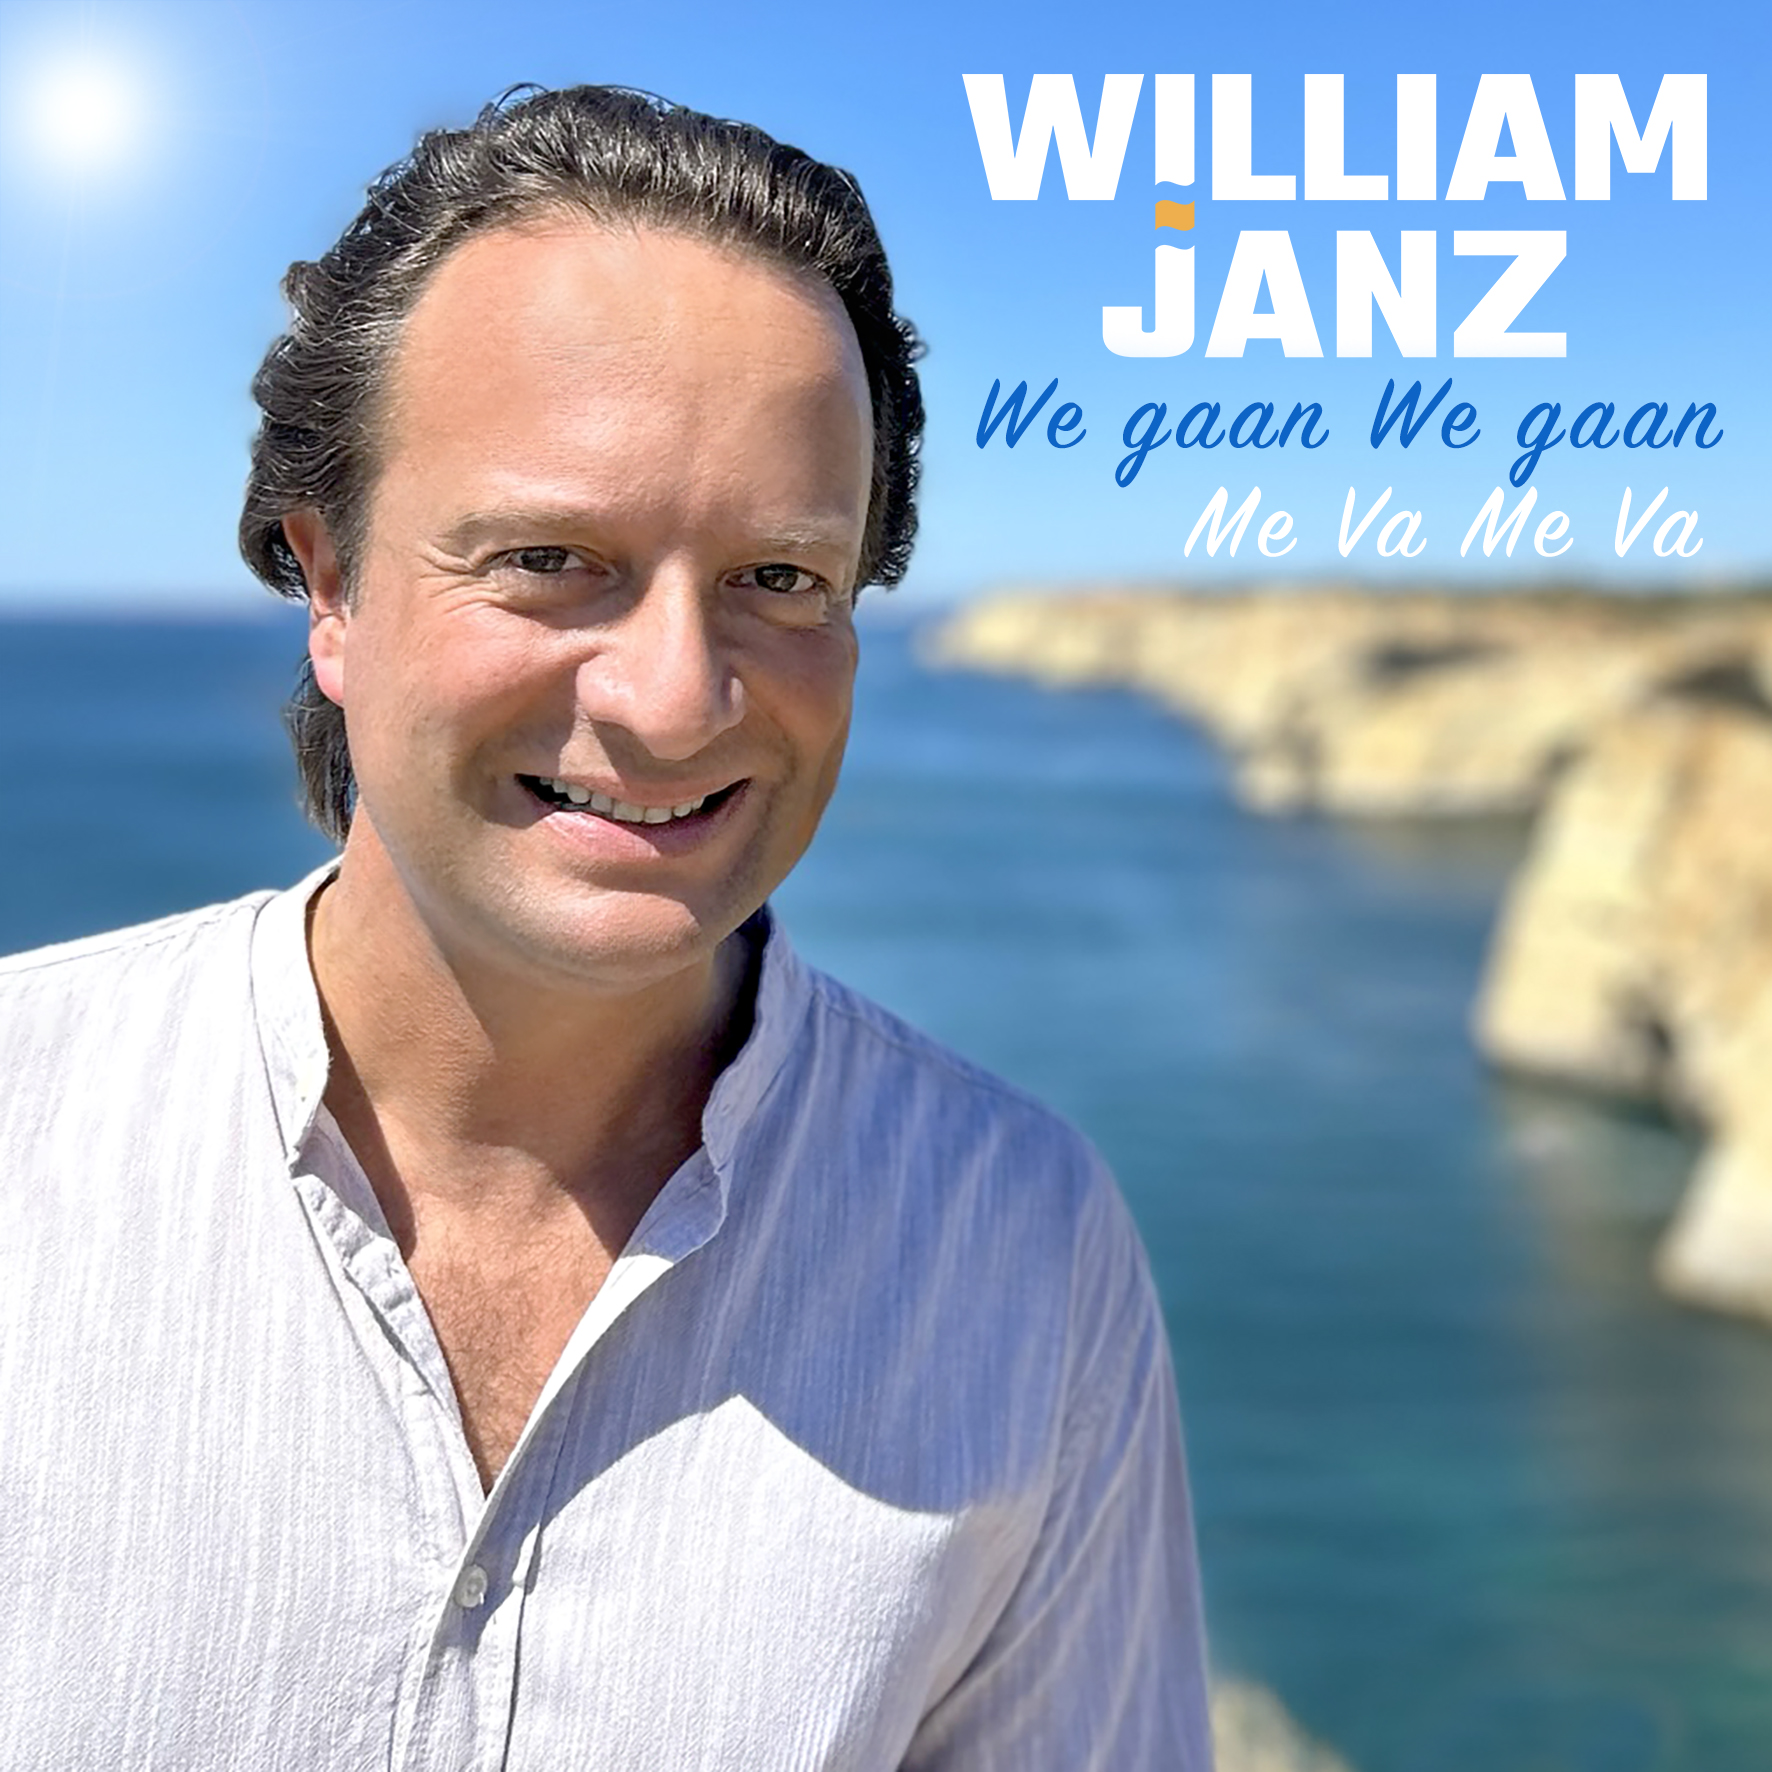 William Janz – We gaan We gaan, Me va Me va